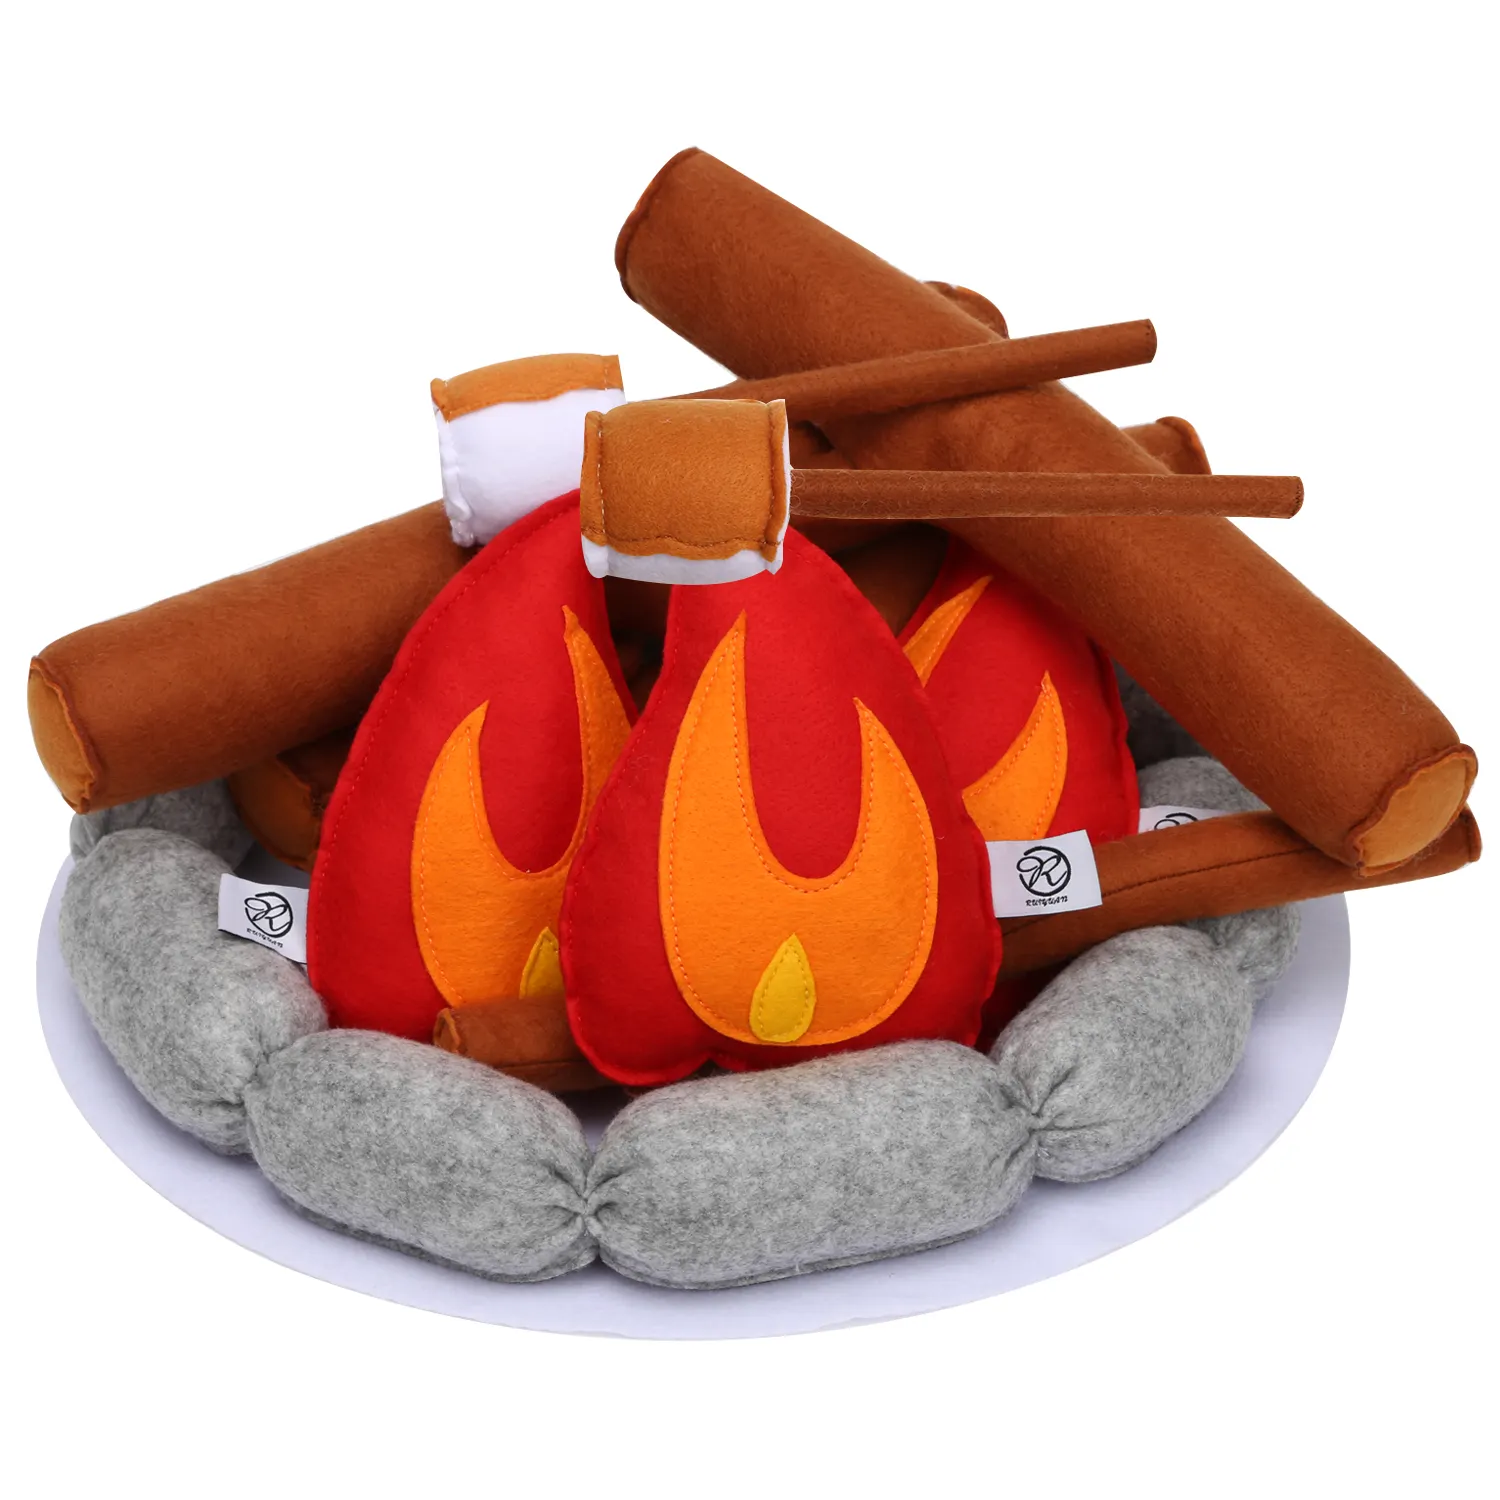 Custom Handmade Felt Baby Educational Toys Kids Pretend Camping Fire Play Set Felt Campfire Plush Toy